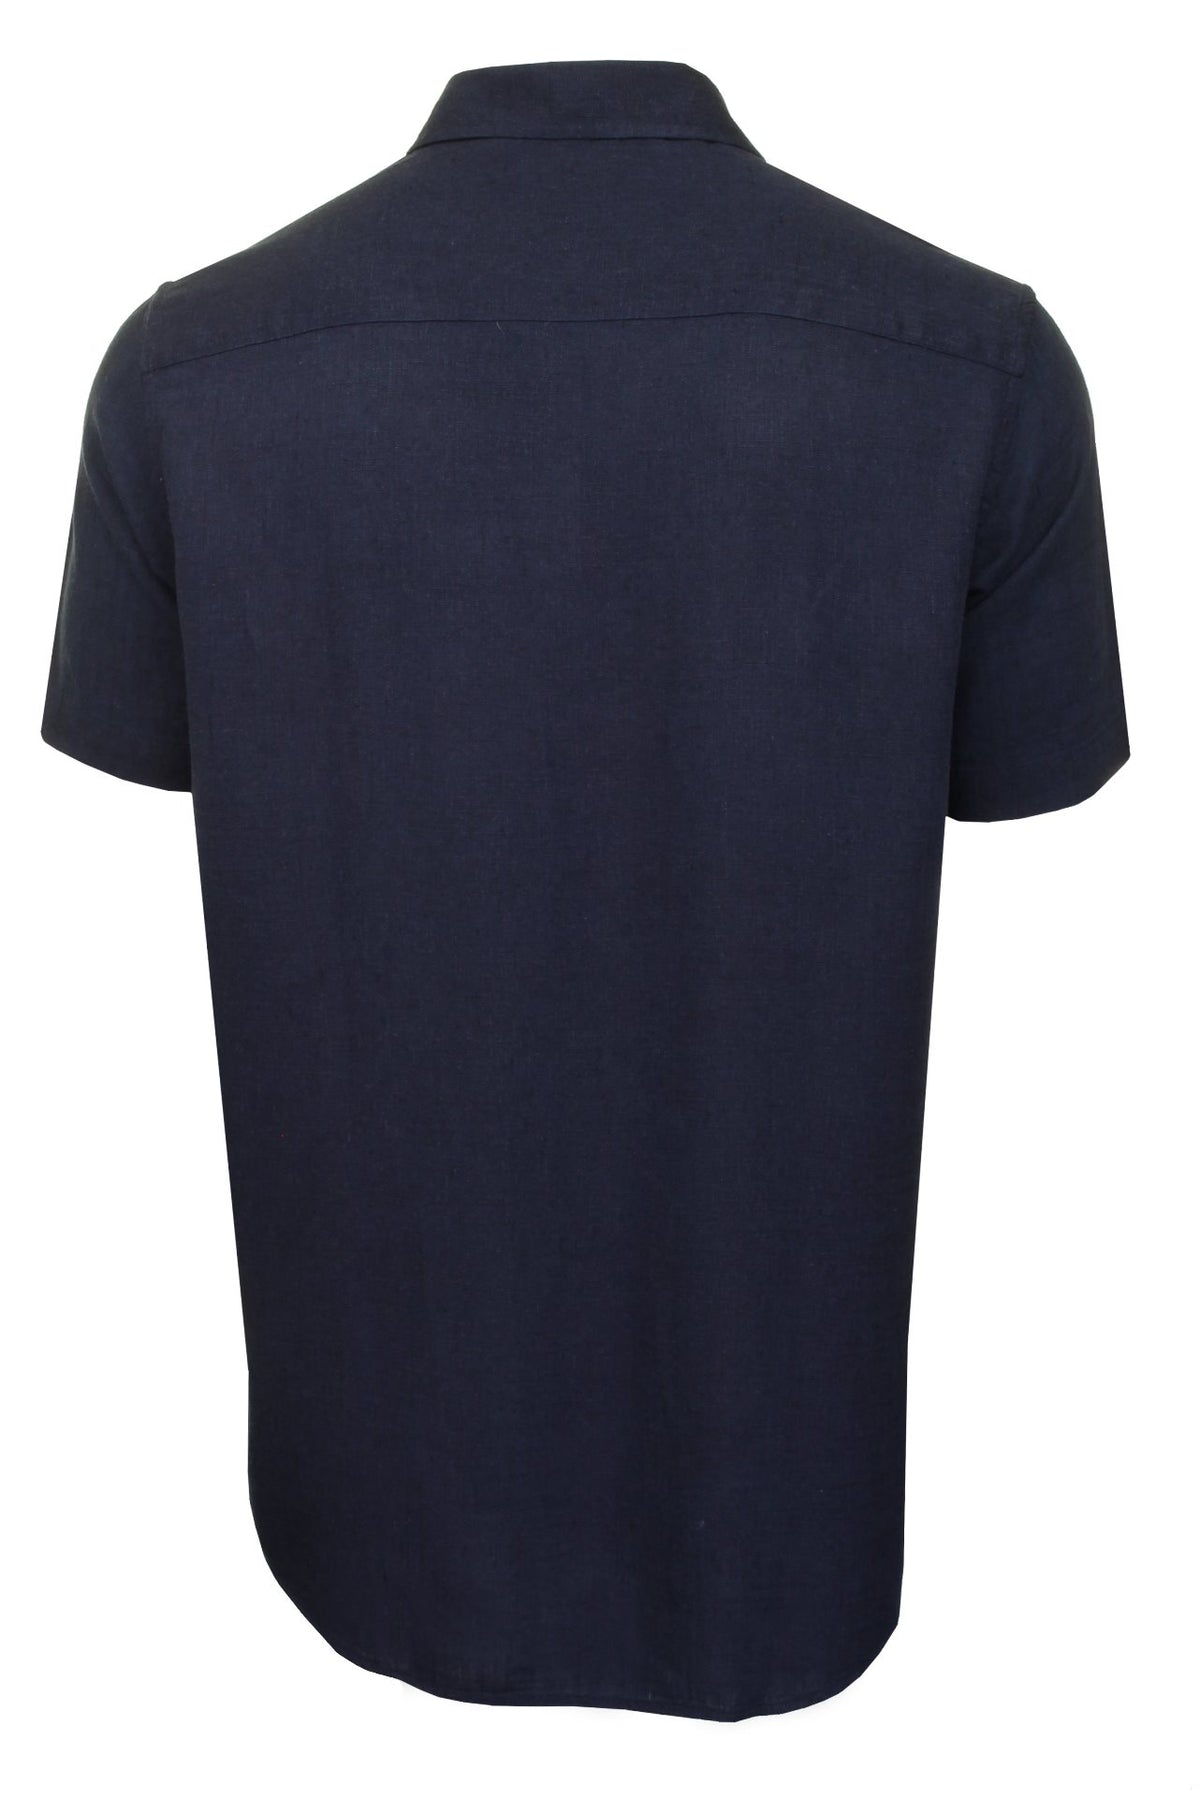 Brave Soul Mens Linen Shirt 'ESK' - Short Sleeved, 03, Msh-508Esk, Rich Navy